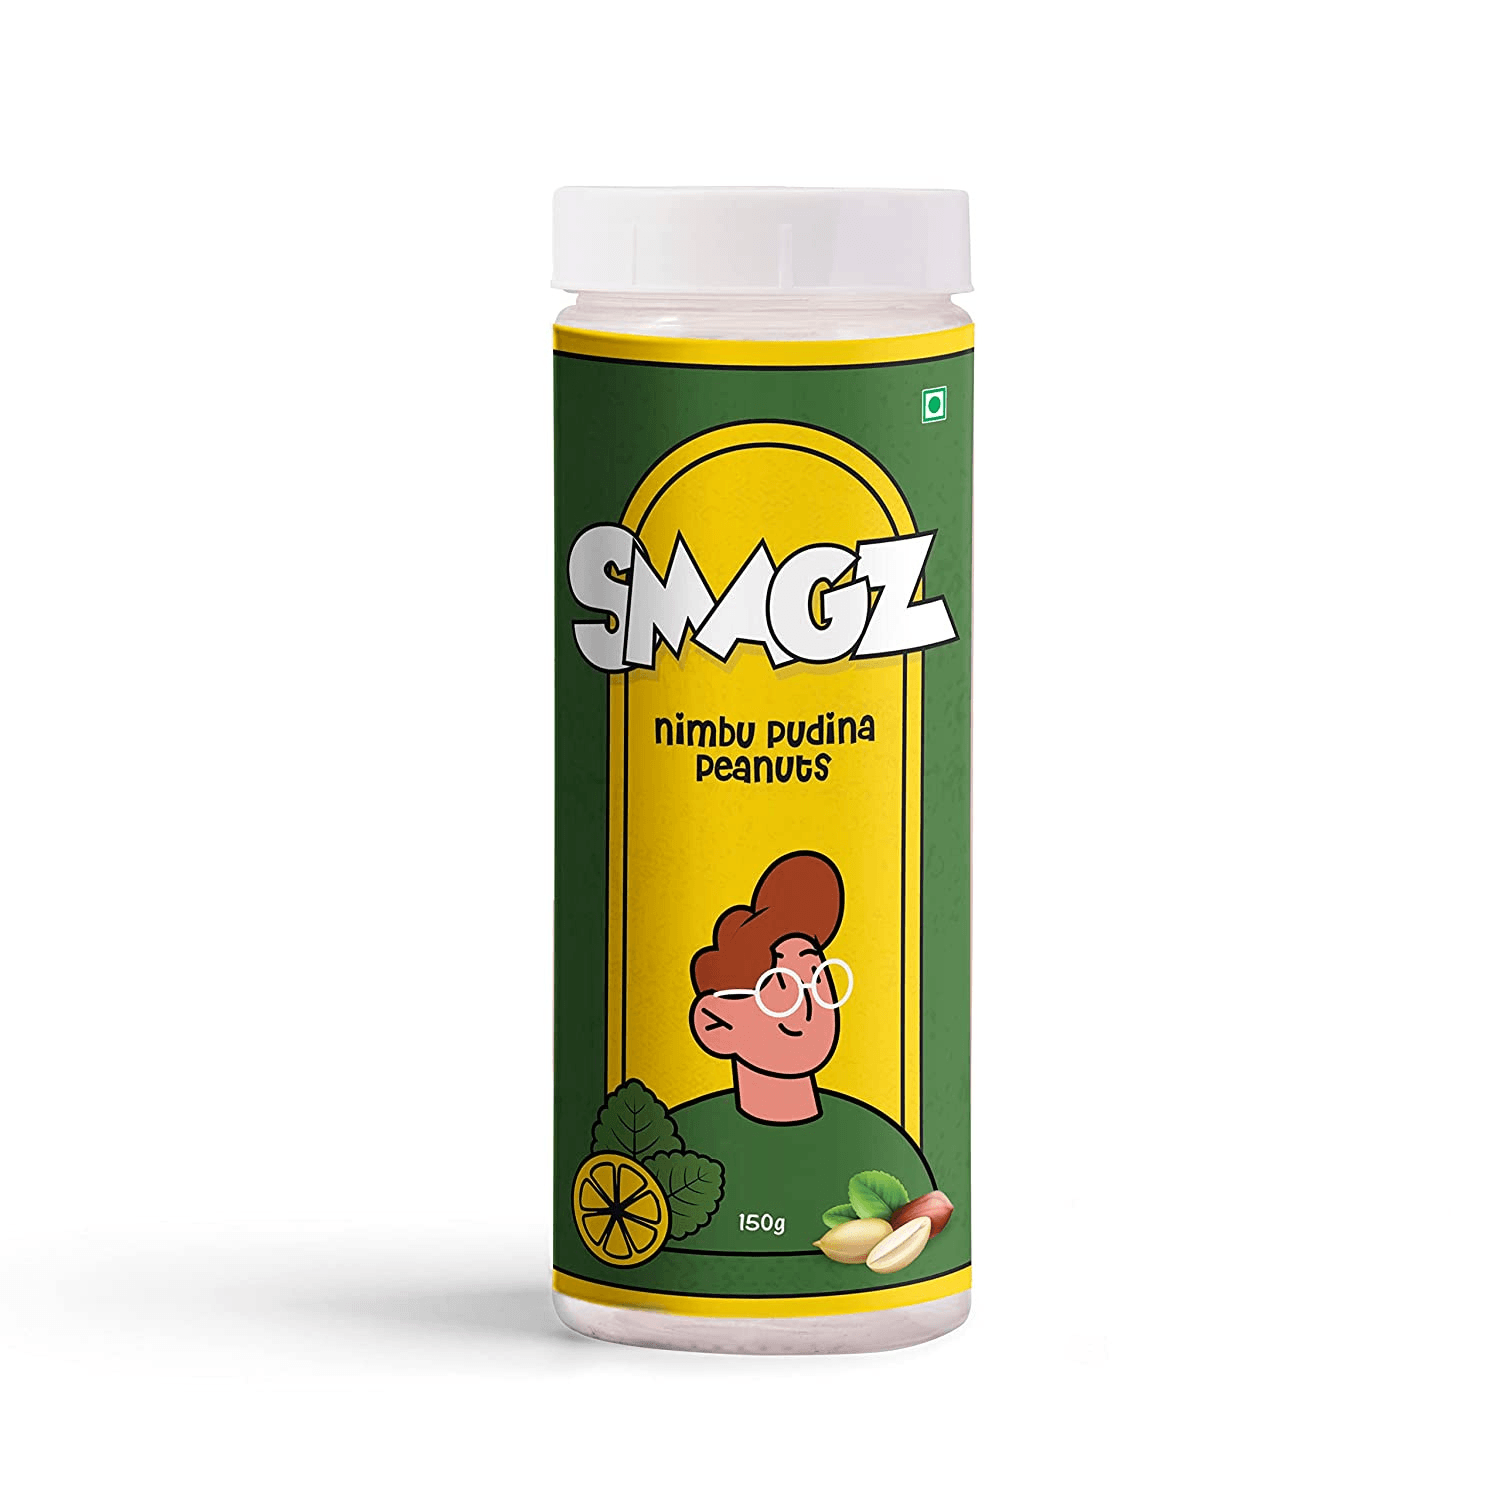 SMAGZ Nimbu Pudina Peanut Healthy Namkeen and Snacks